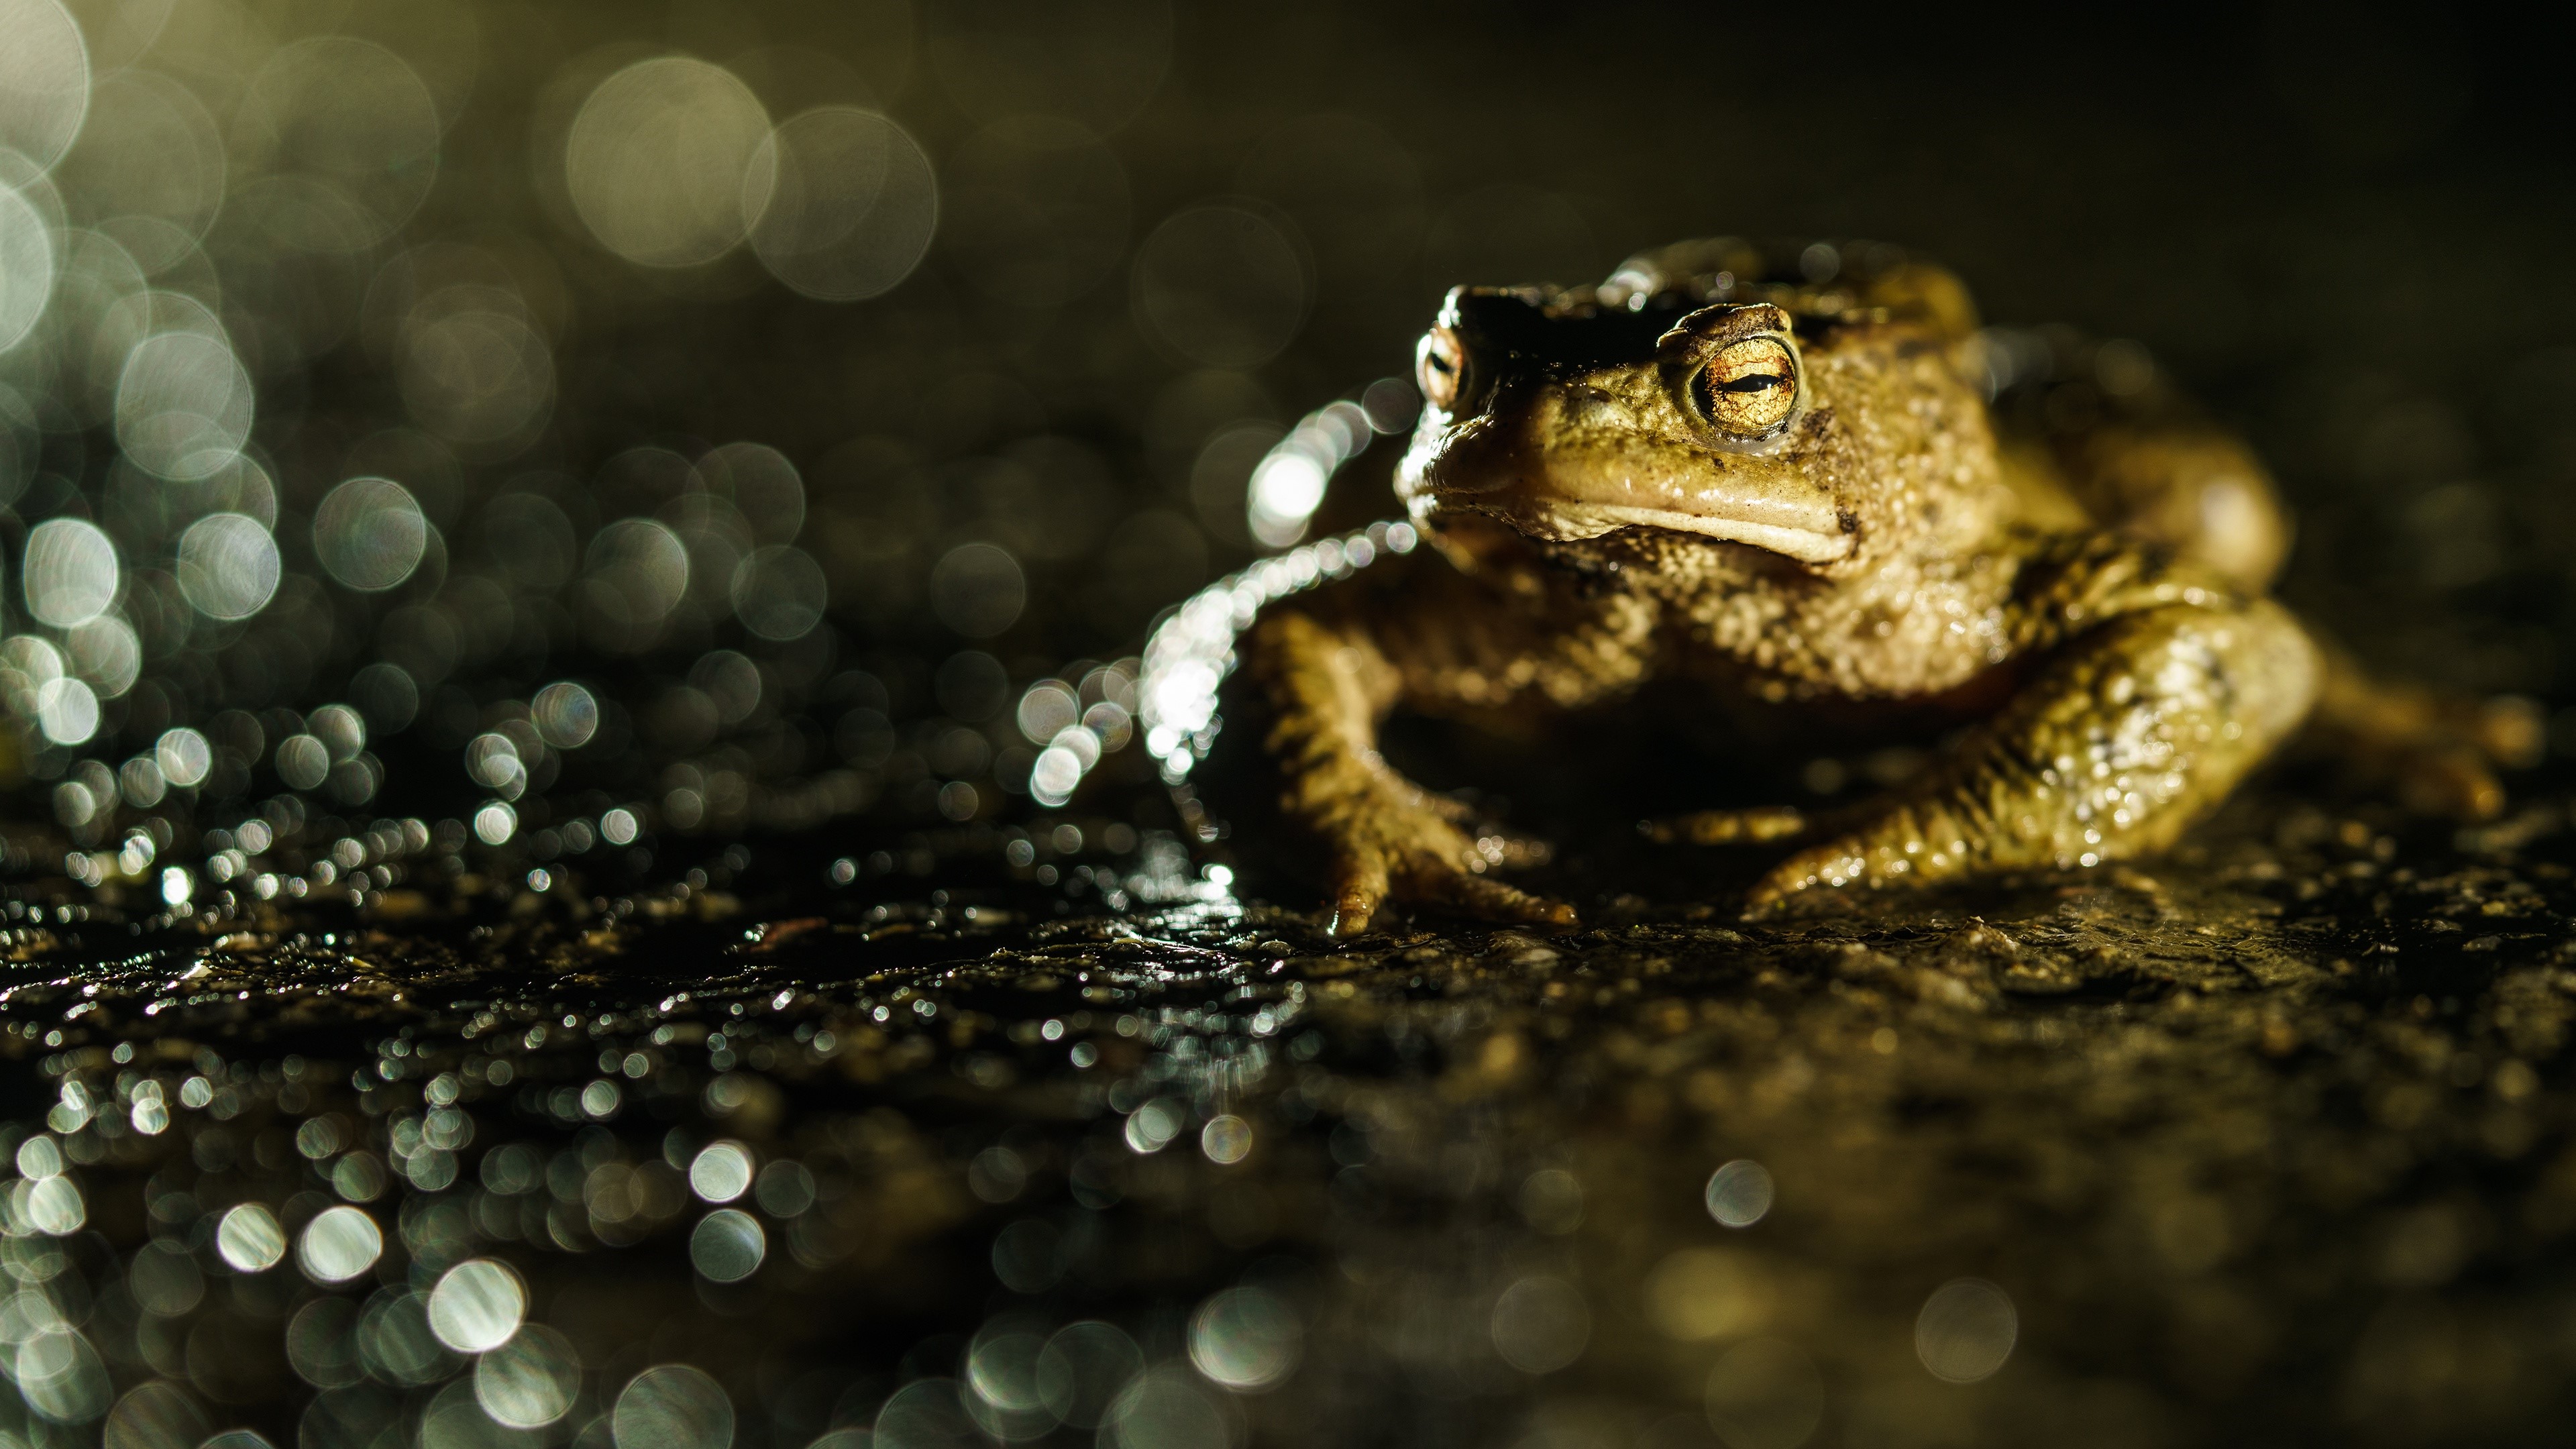 True toad HD wallpaper, Background